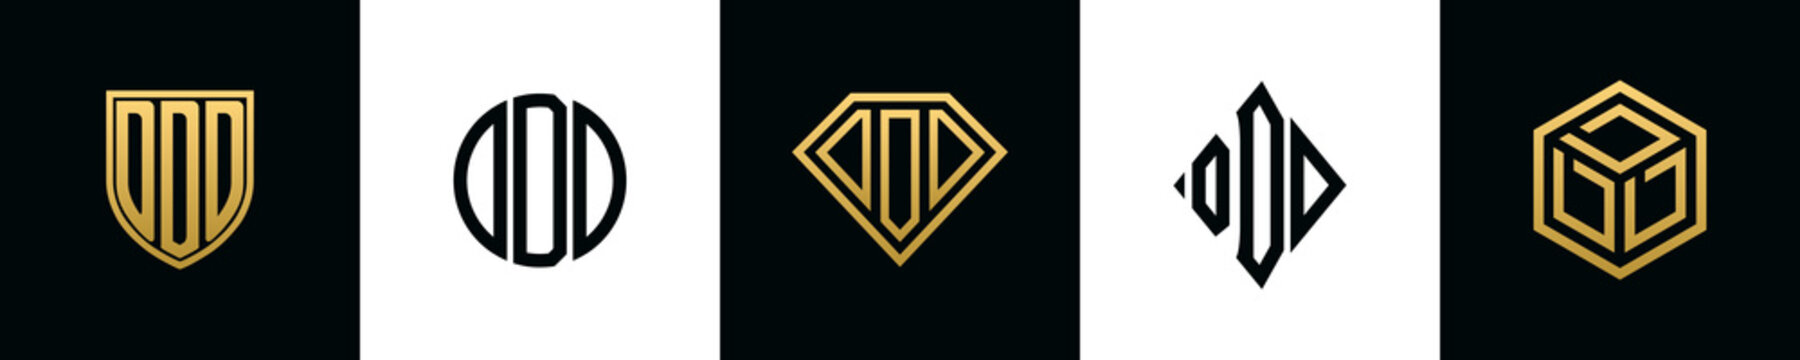 Initial letters DDD logo designs Bundle